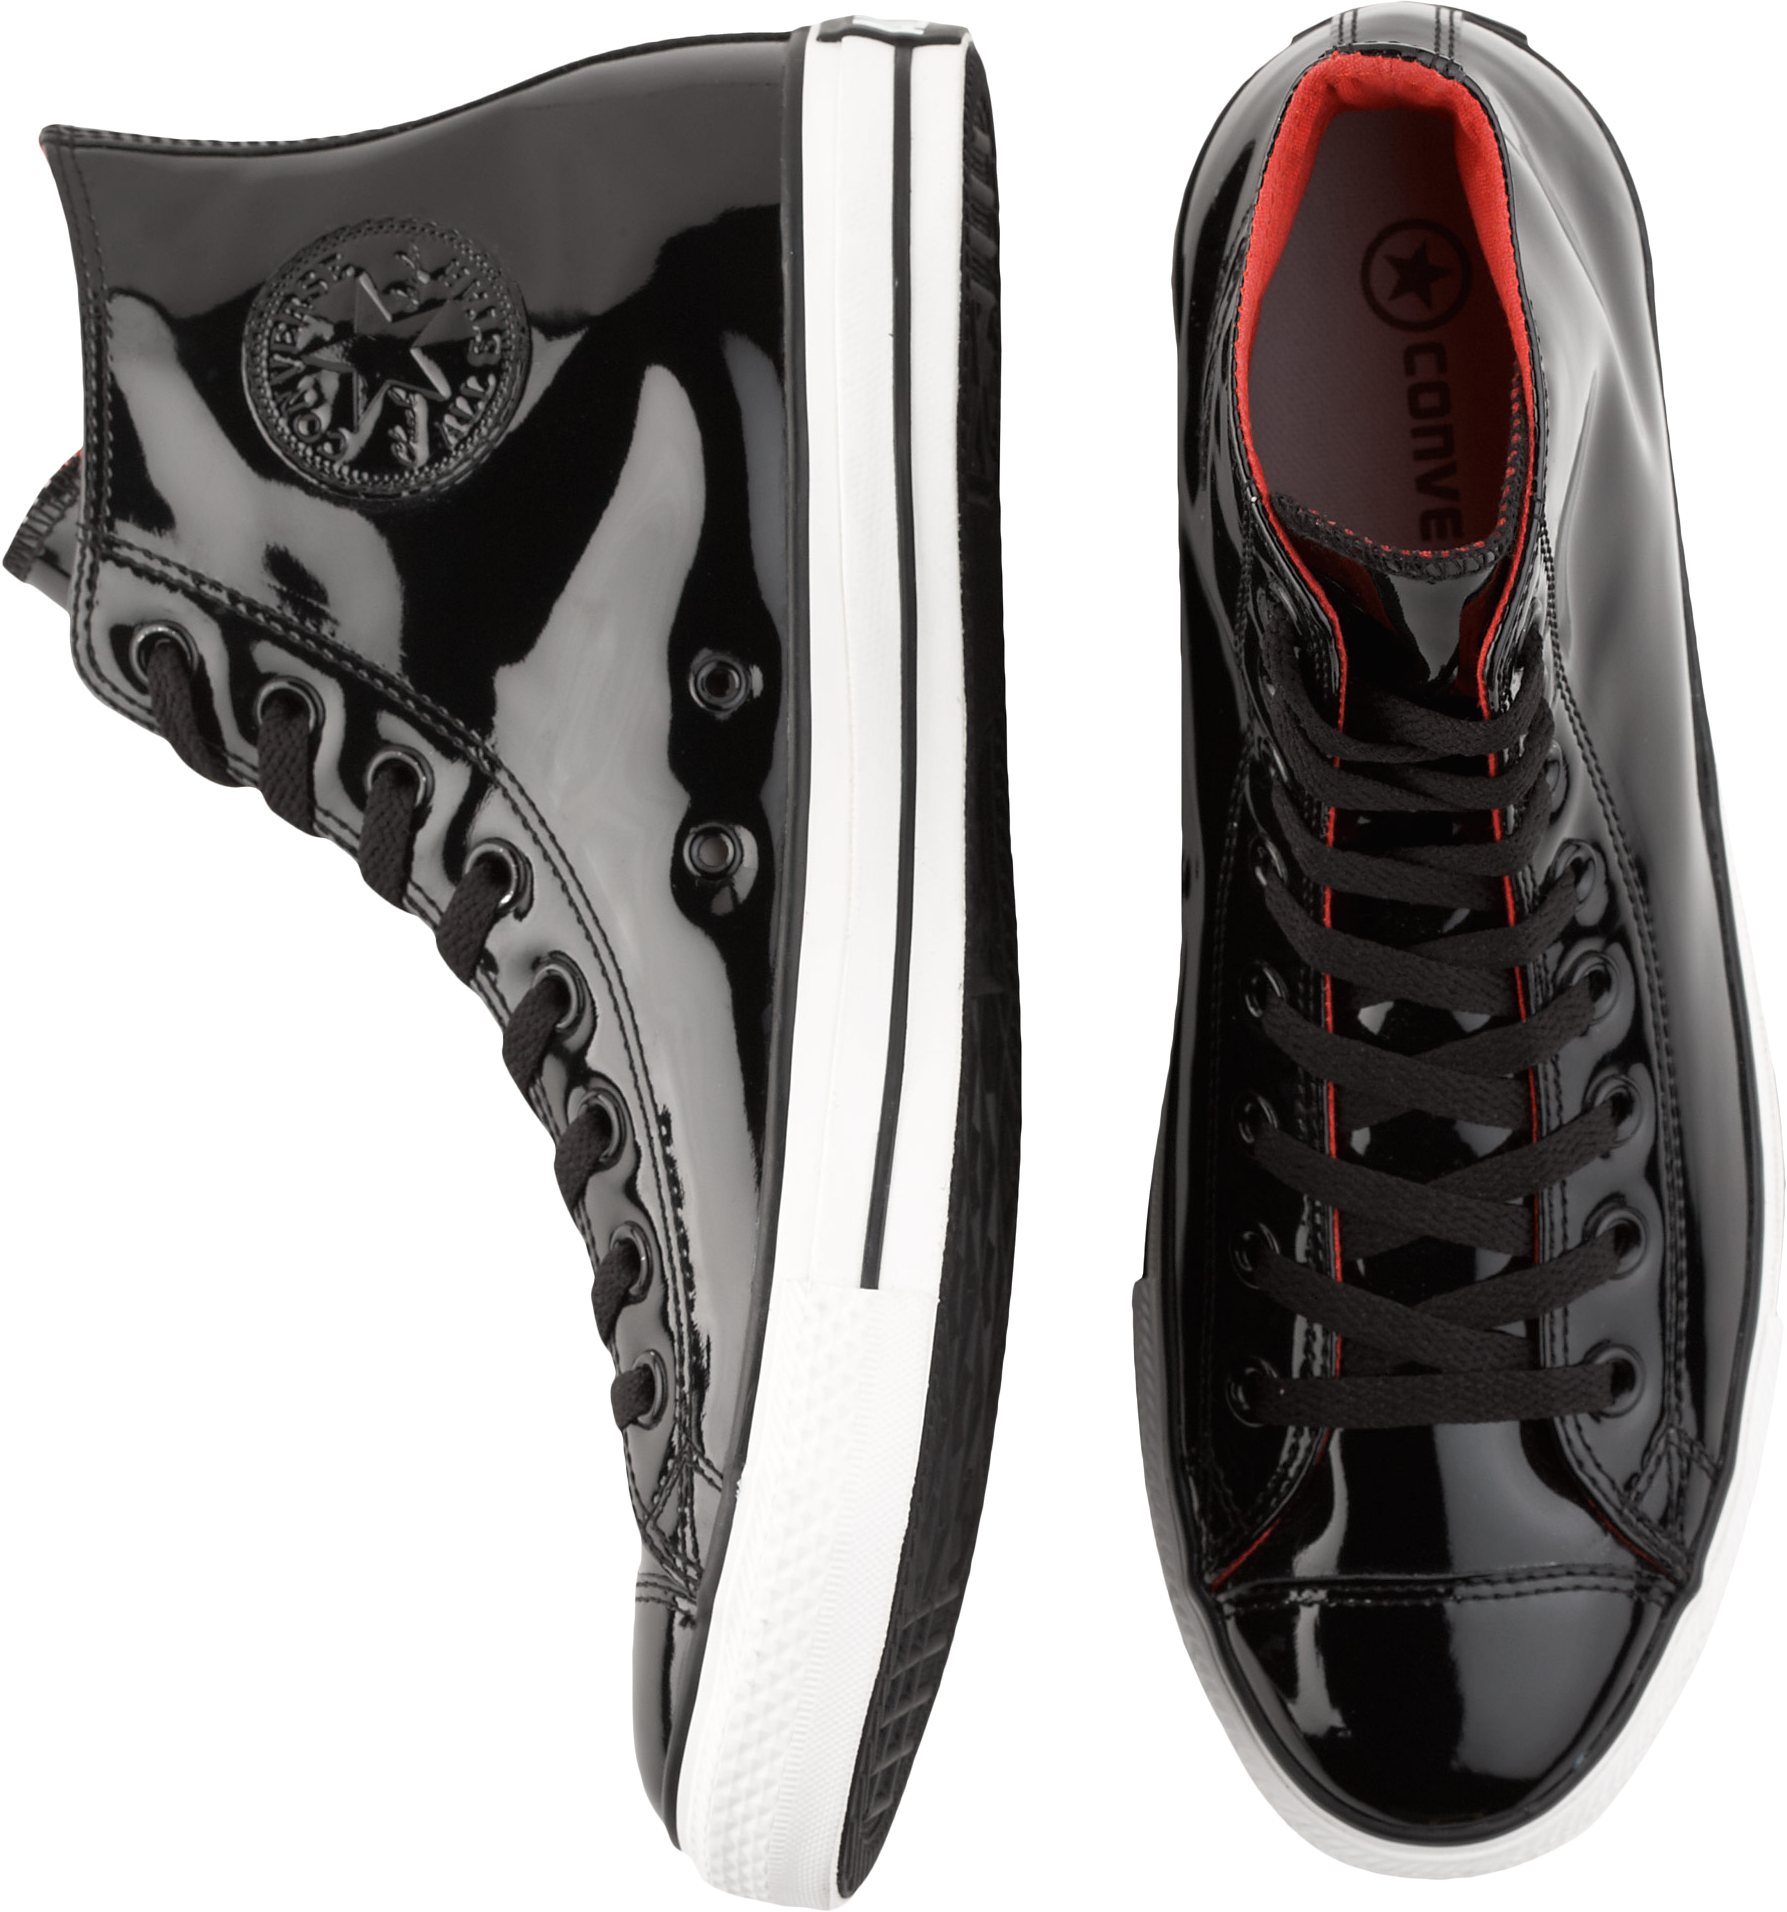 Black Patent Leather High-Top Tennis Shoes - Men's Casual Shoes - Converse  | Men's Wearhouse